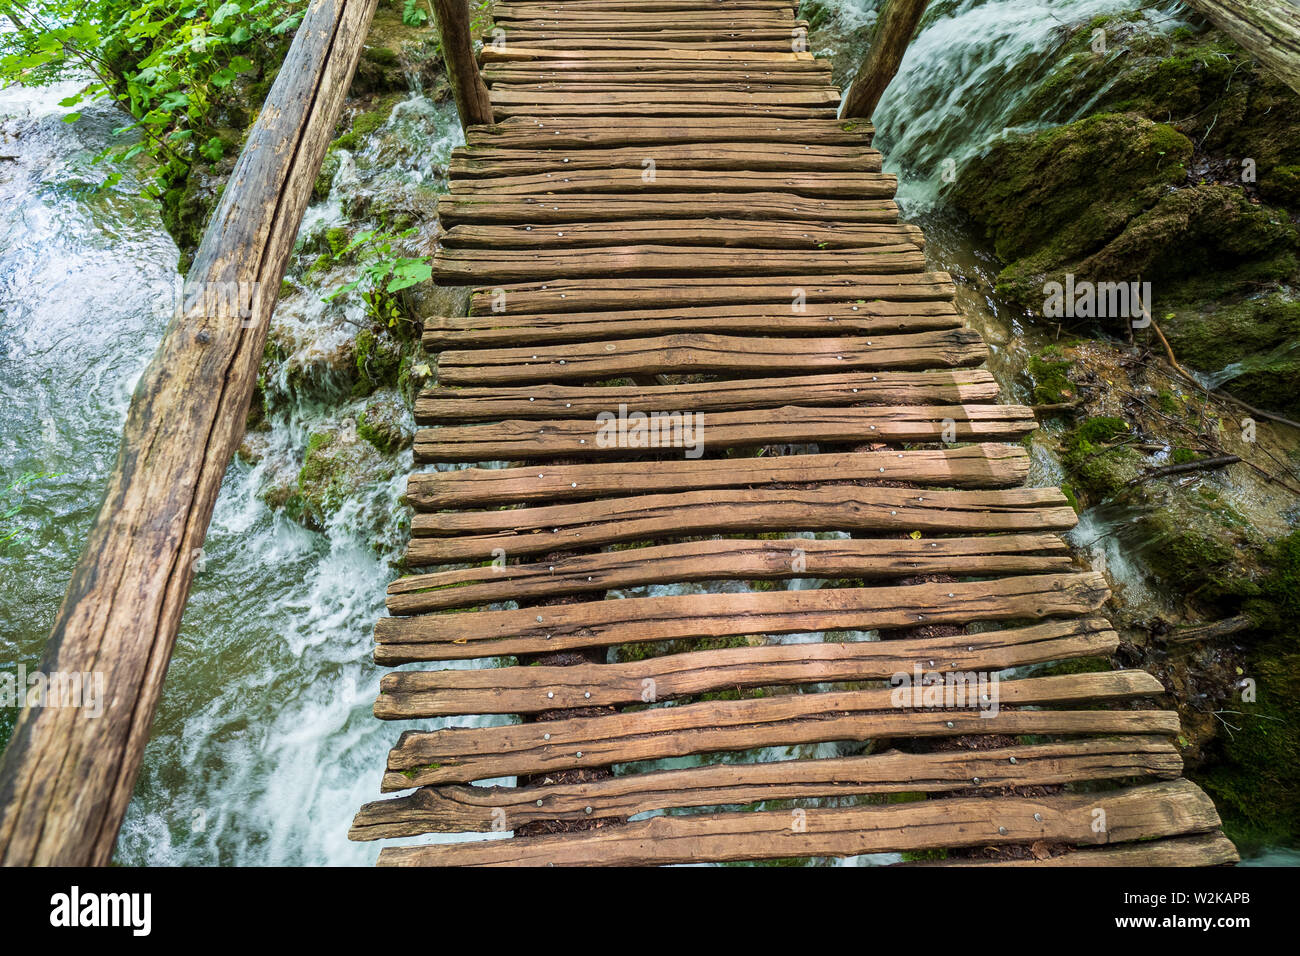 Makeshift wooden bridge over water Stock Photo - Alamy